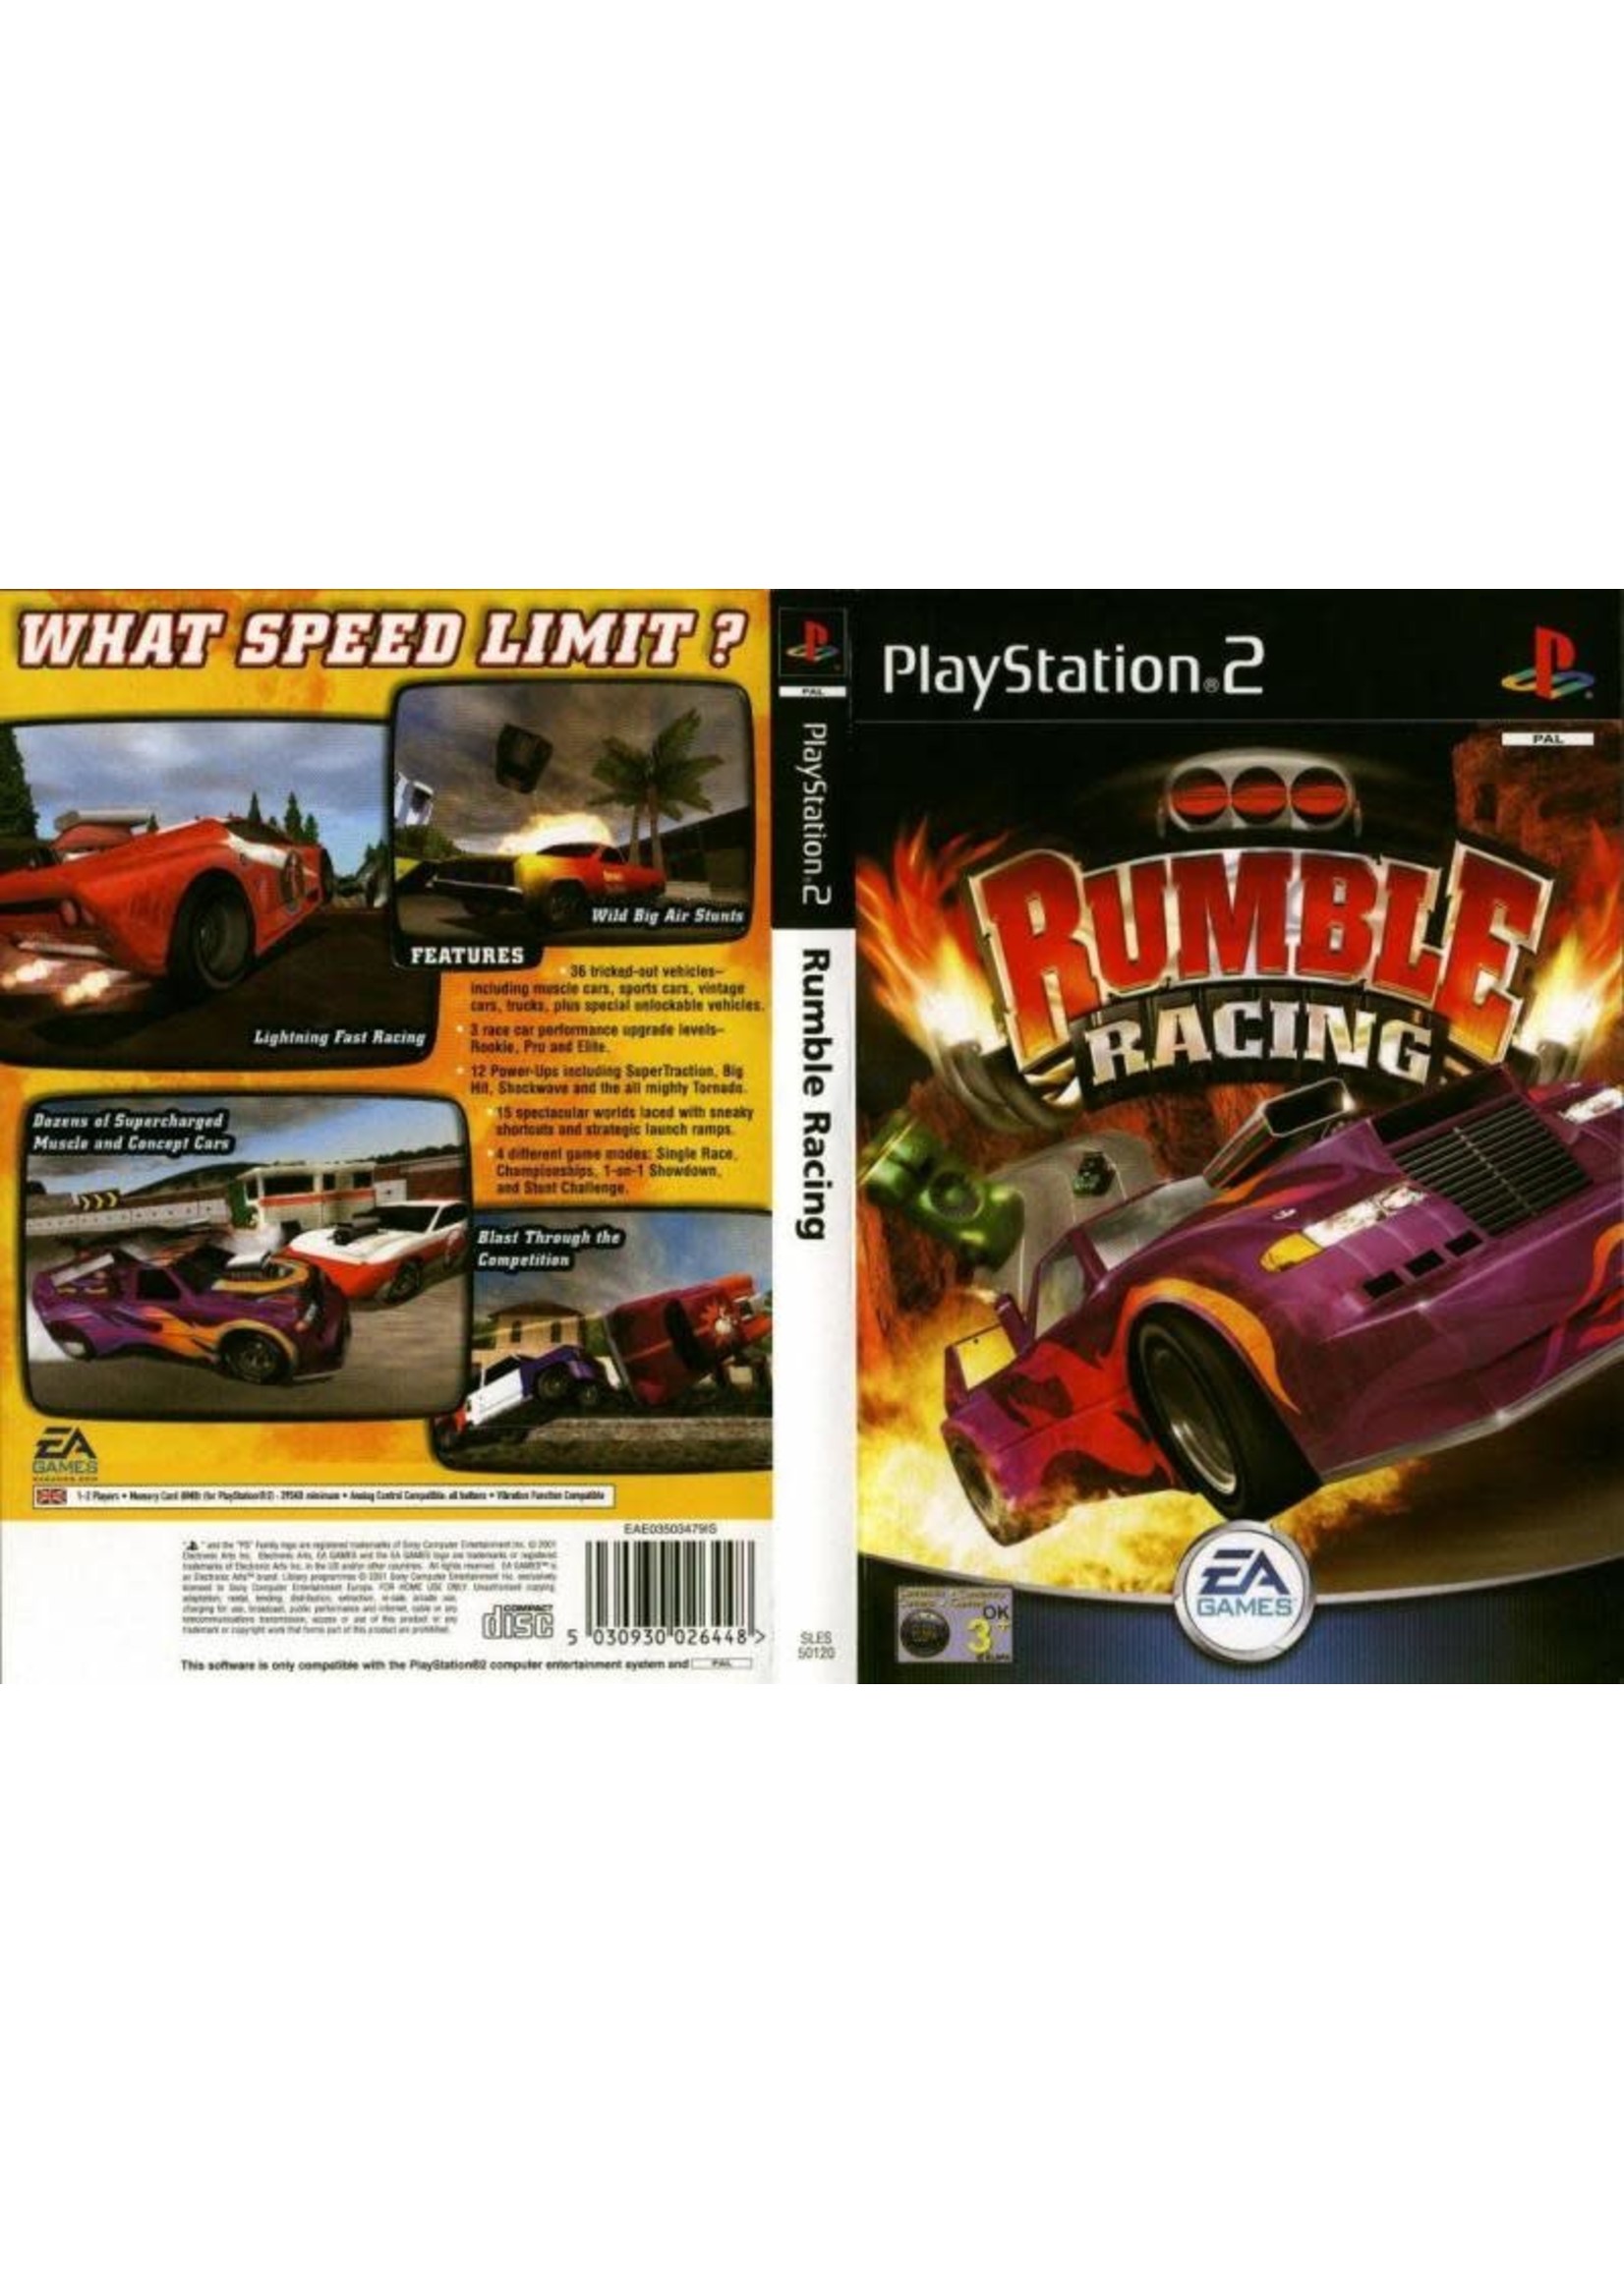 Sony Playstation 2 (PS2) Rumble Racing